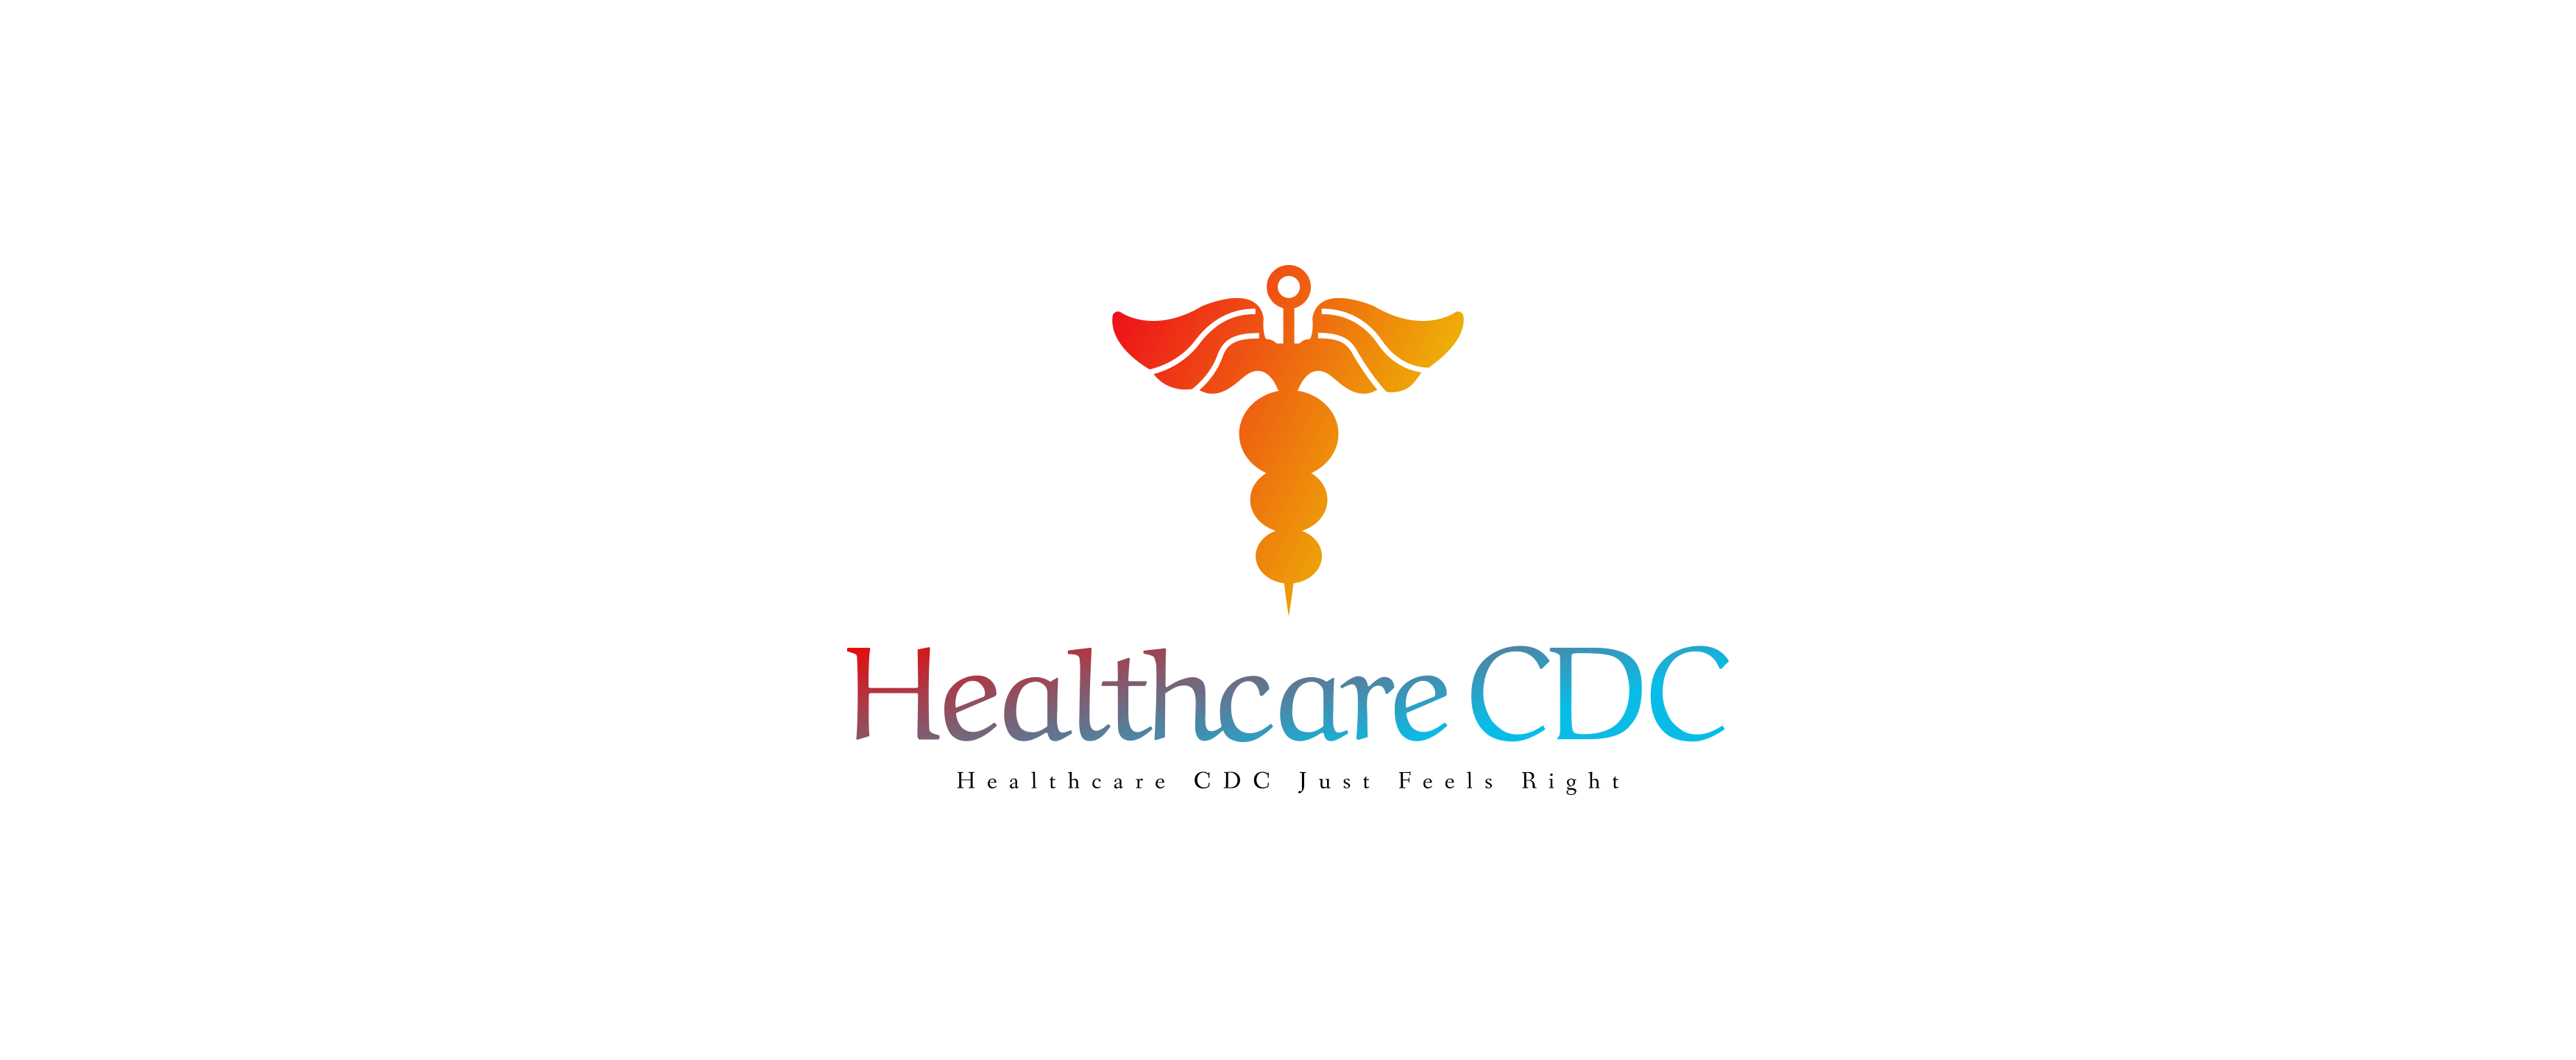 Healthcare CDC